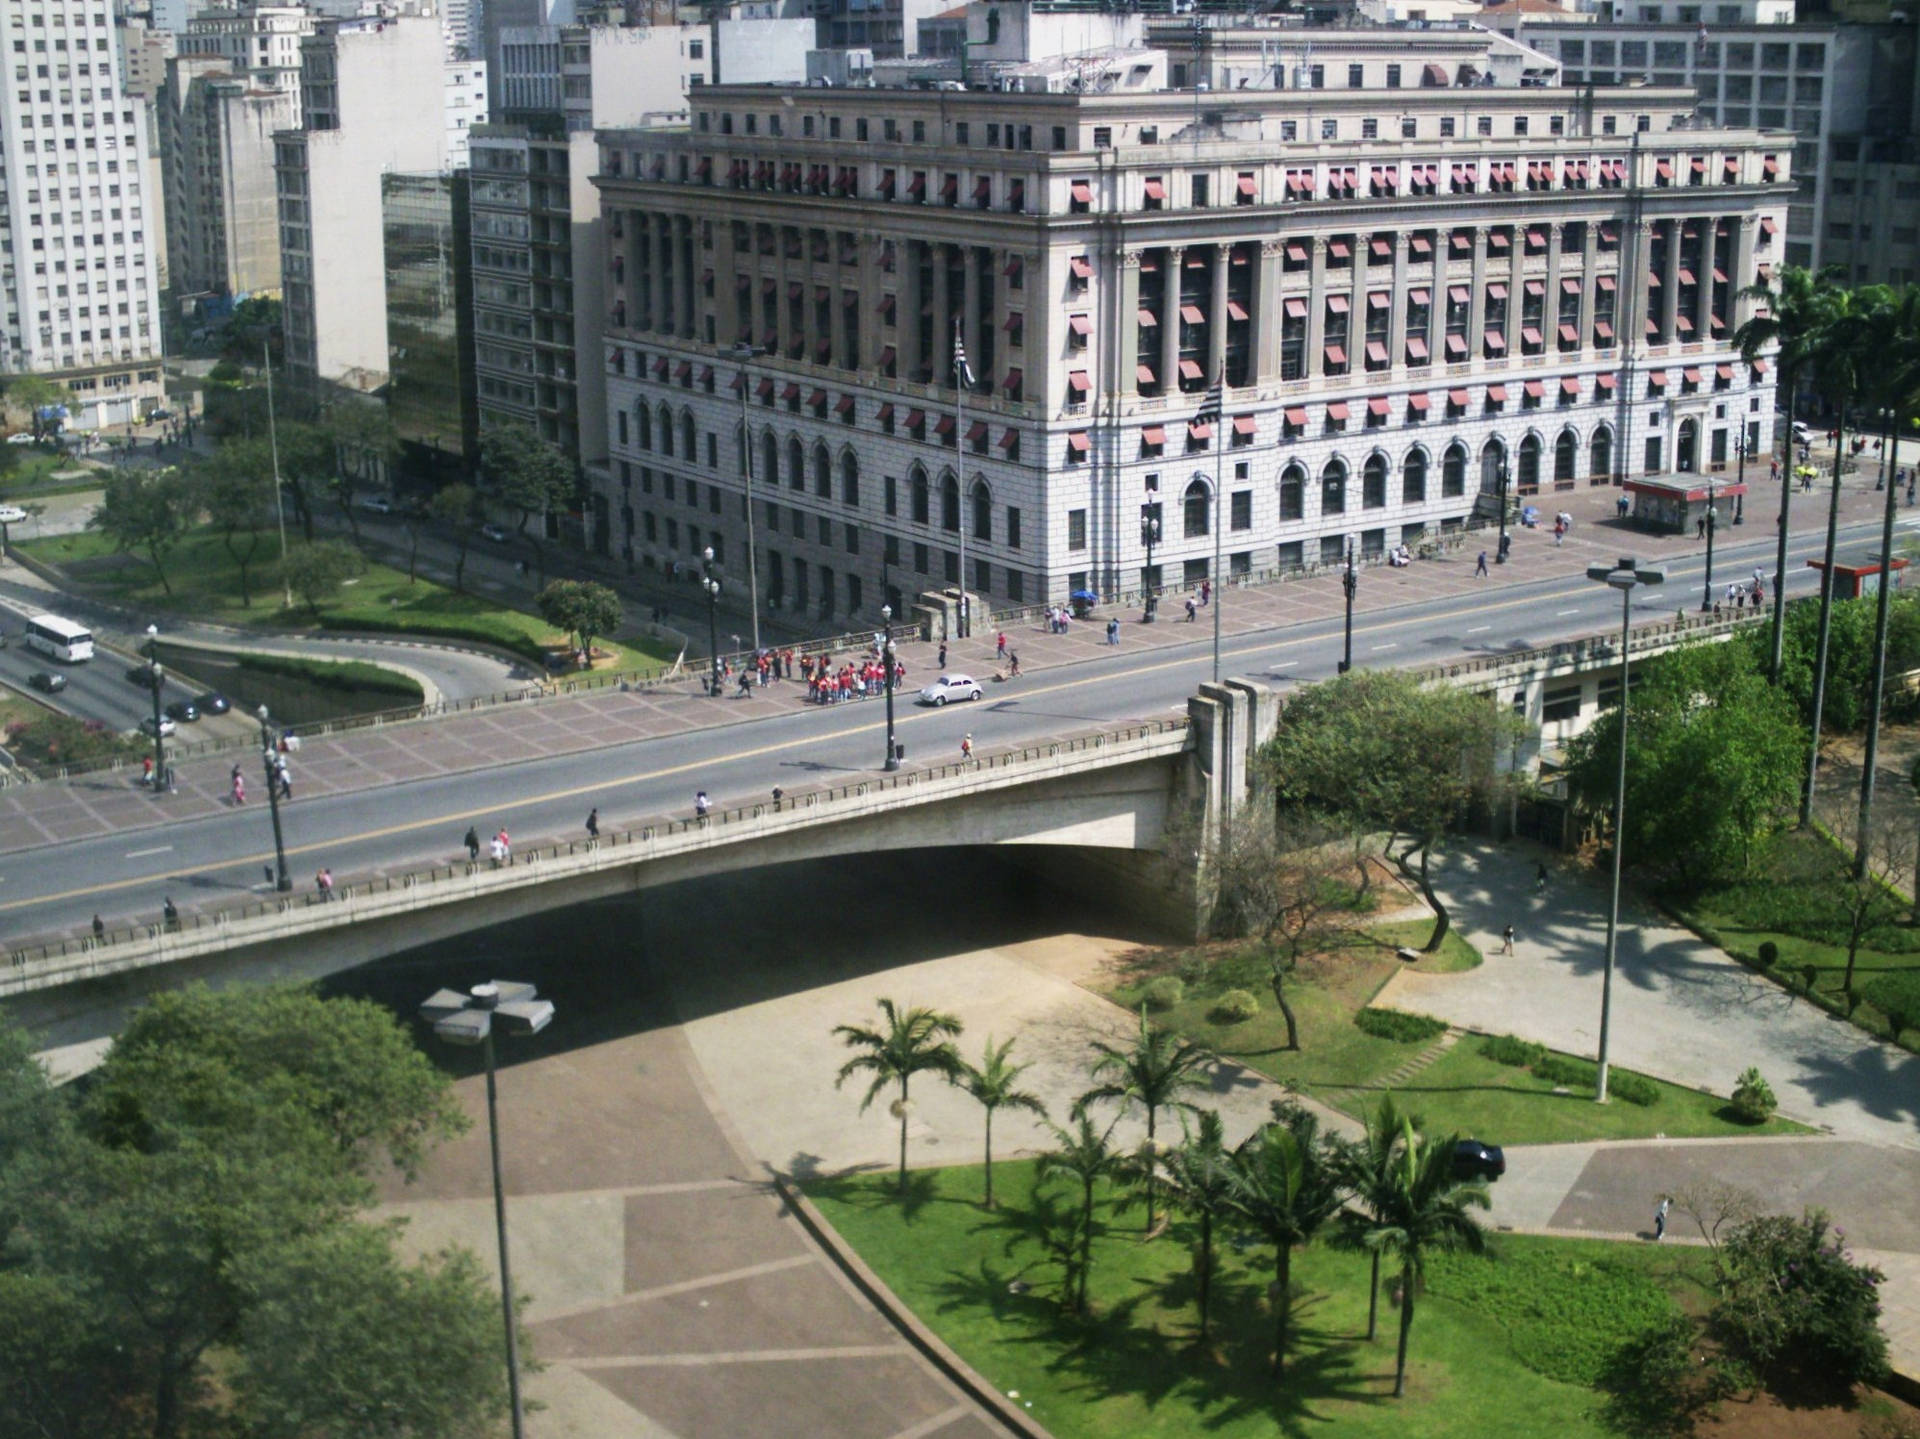 Viaduto Do Cha Sao Paulo Brazil Aerial